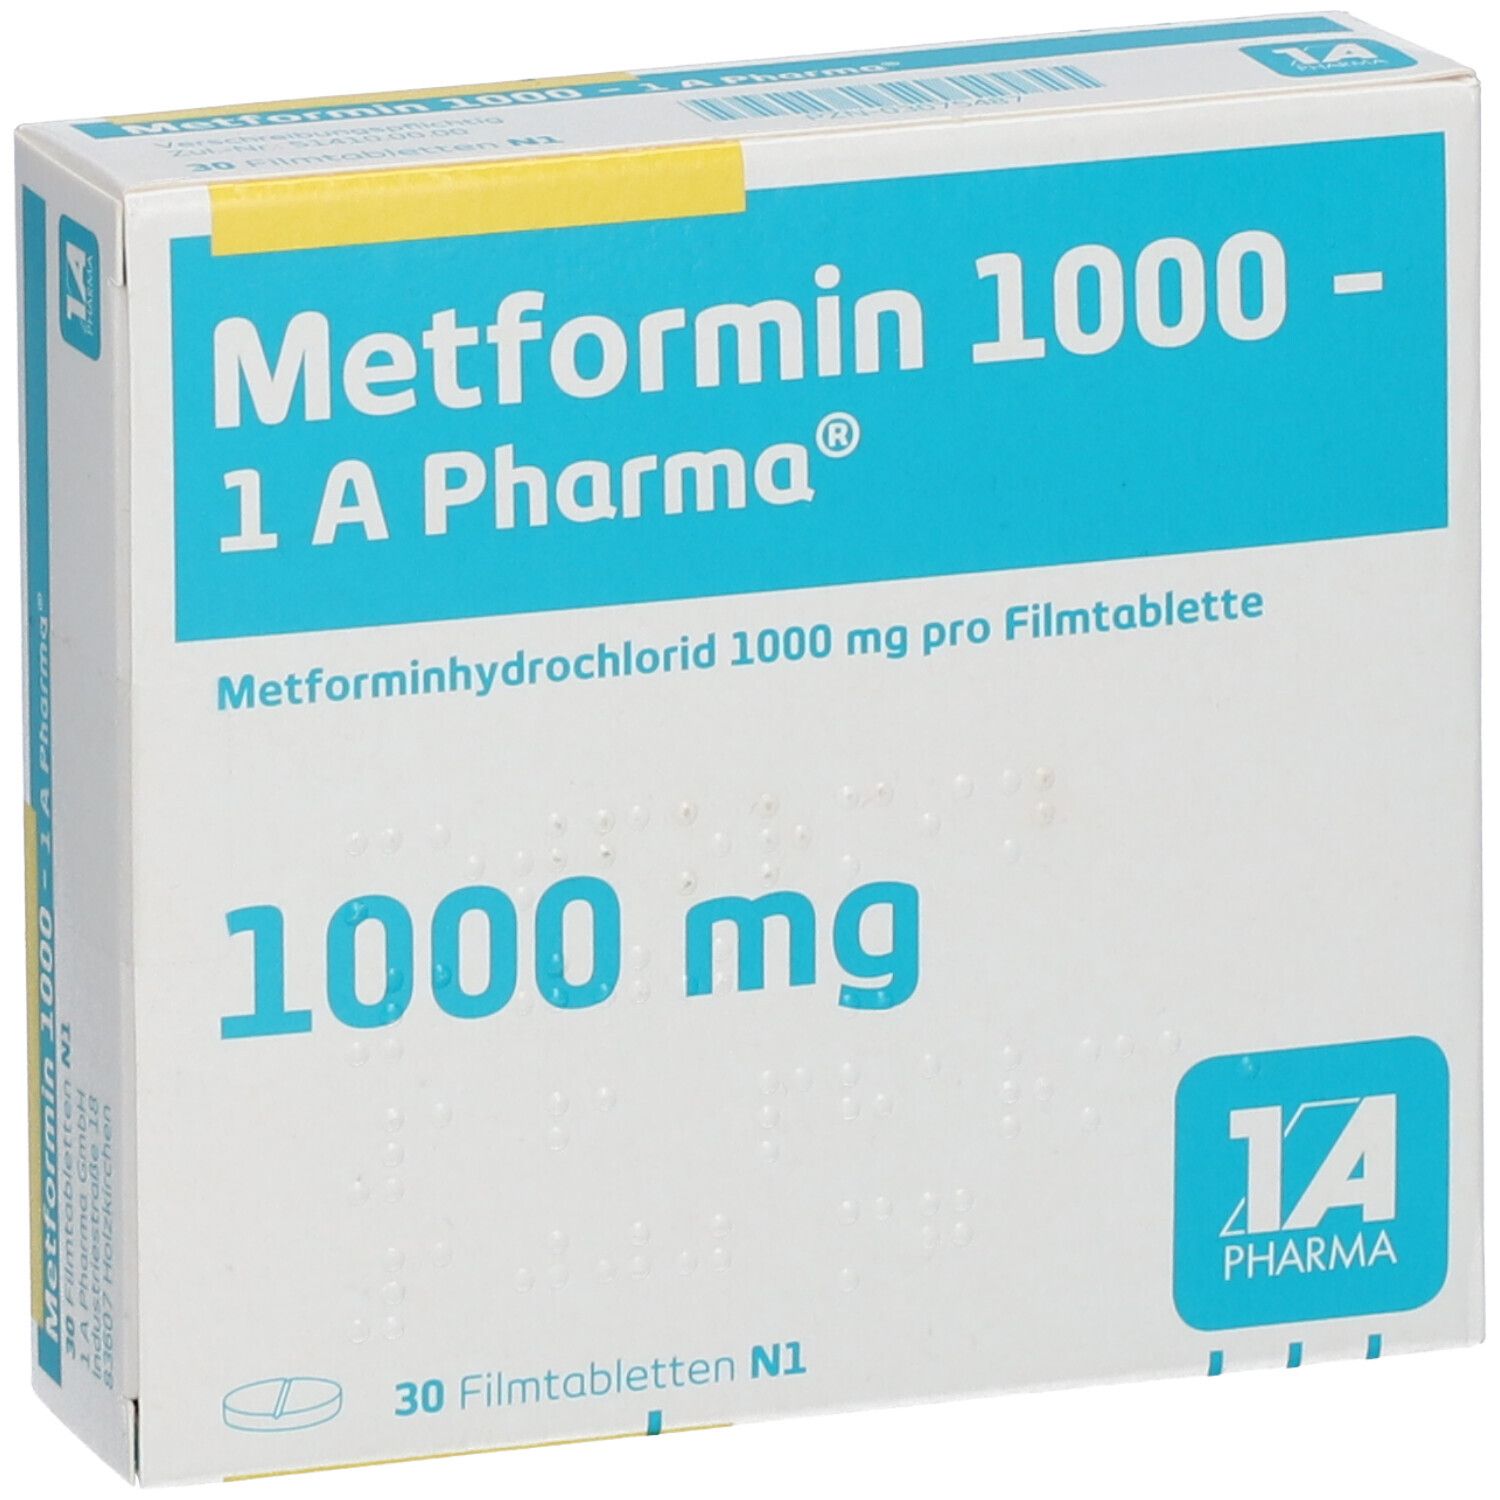 Metformin 1000-1A Pharma®